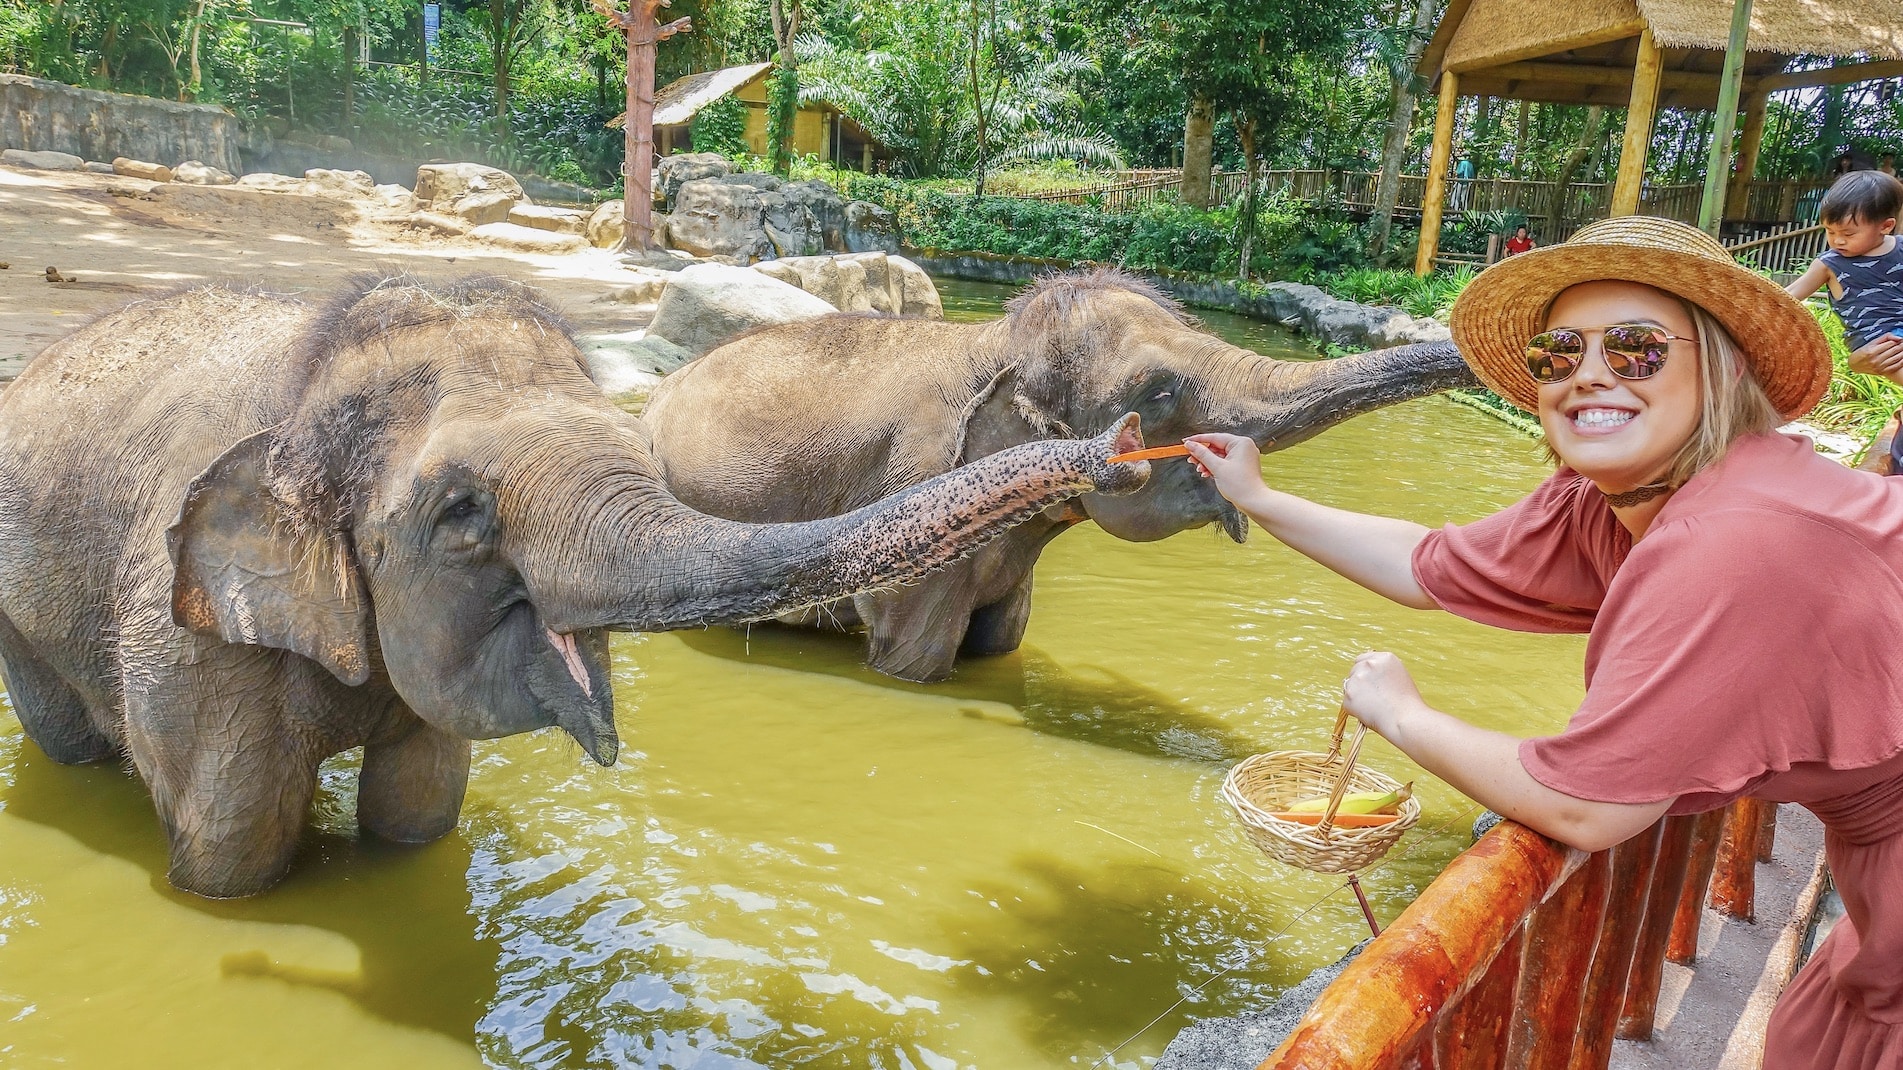 Feeding Elephants at Singapore Zoo